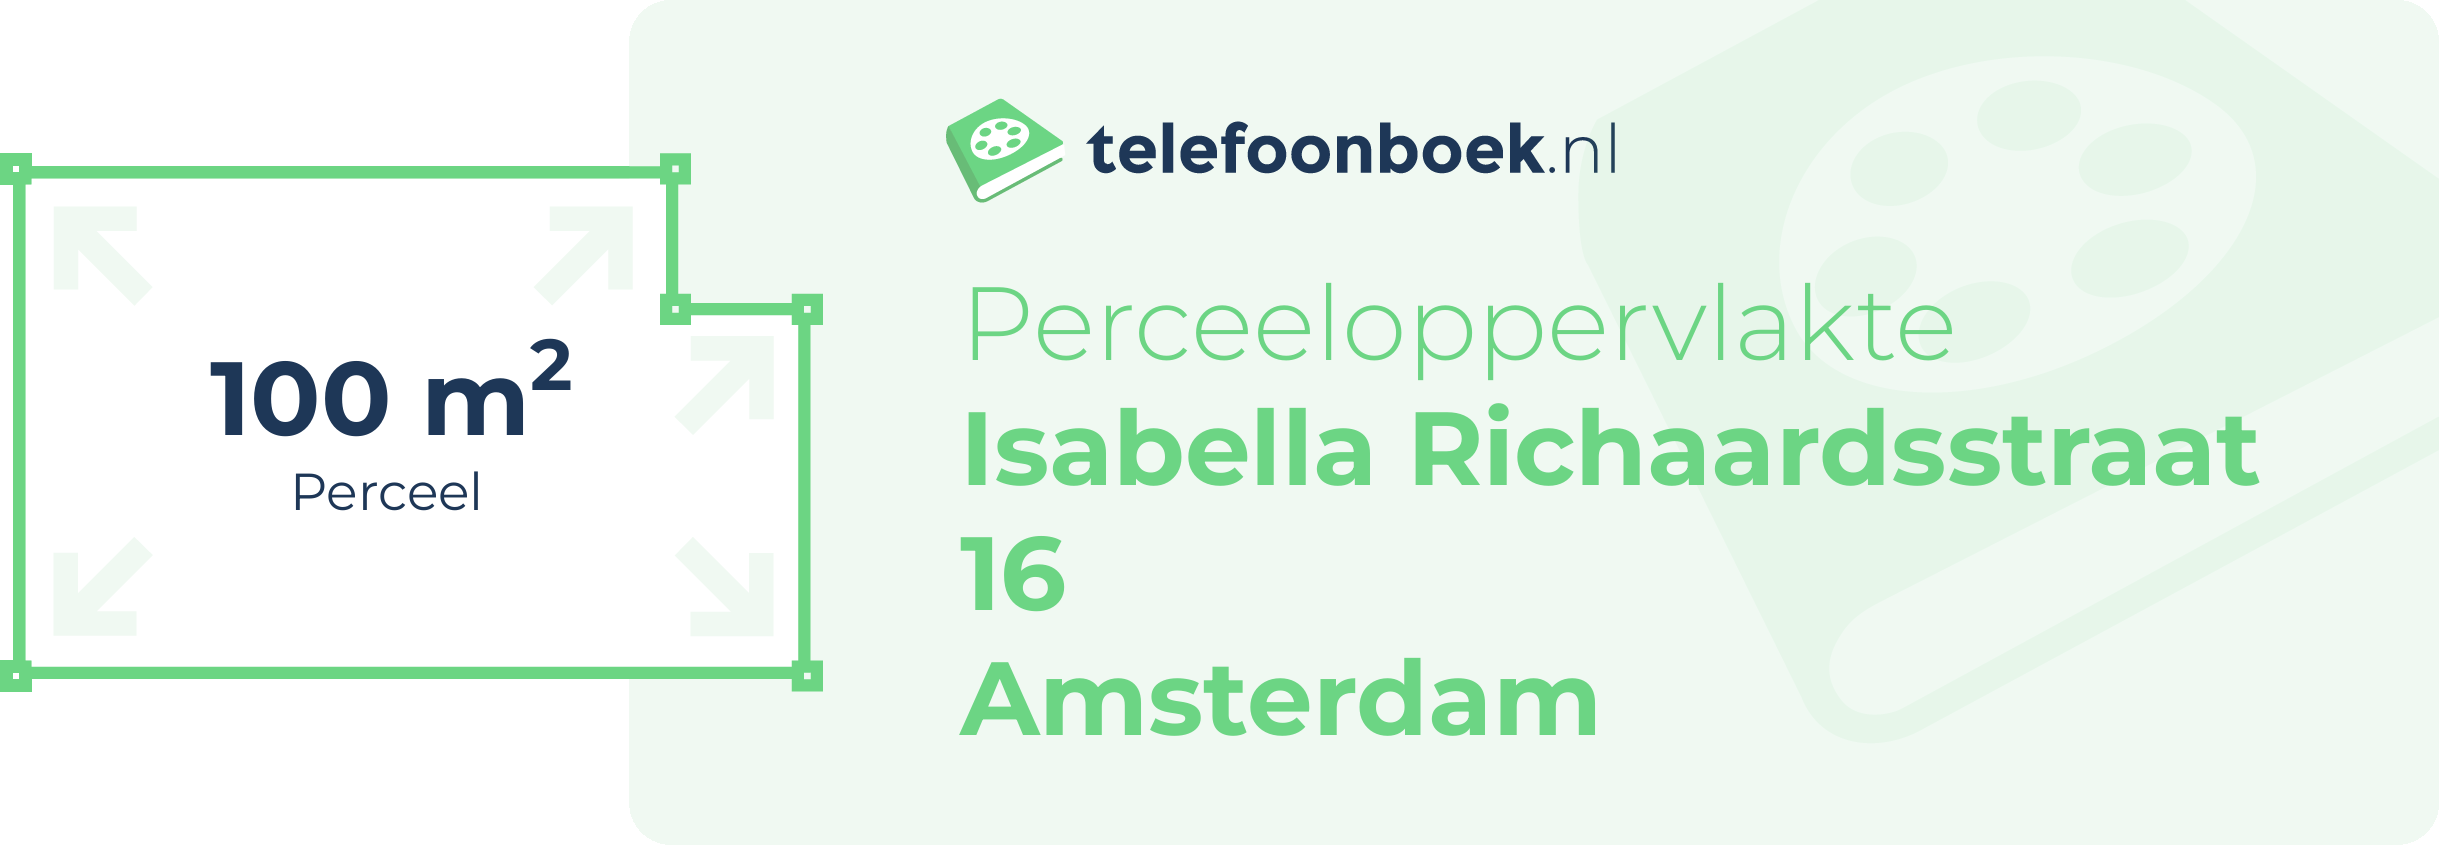 Perceeloppervlakte Isabella Richaardsstraat 16 Amsterdam